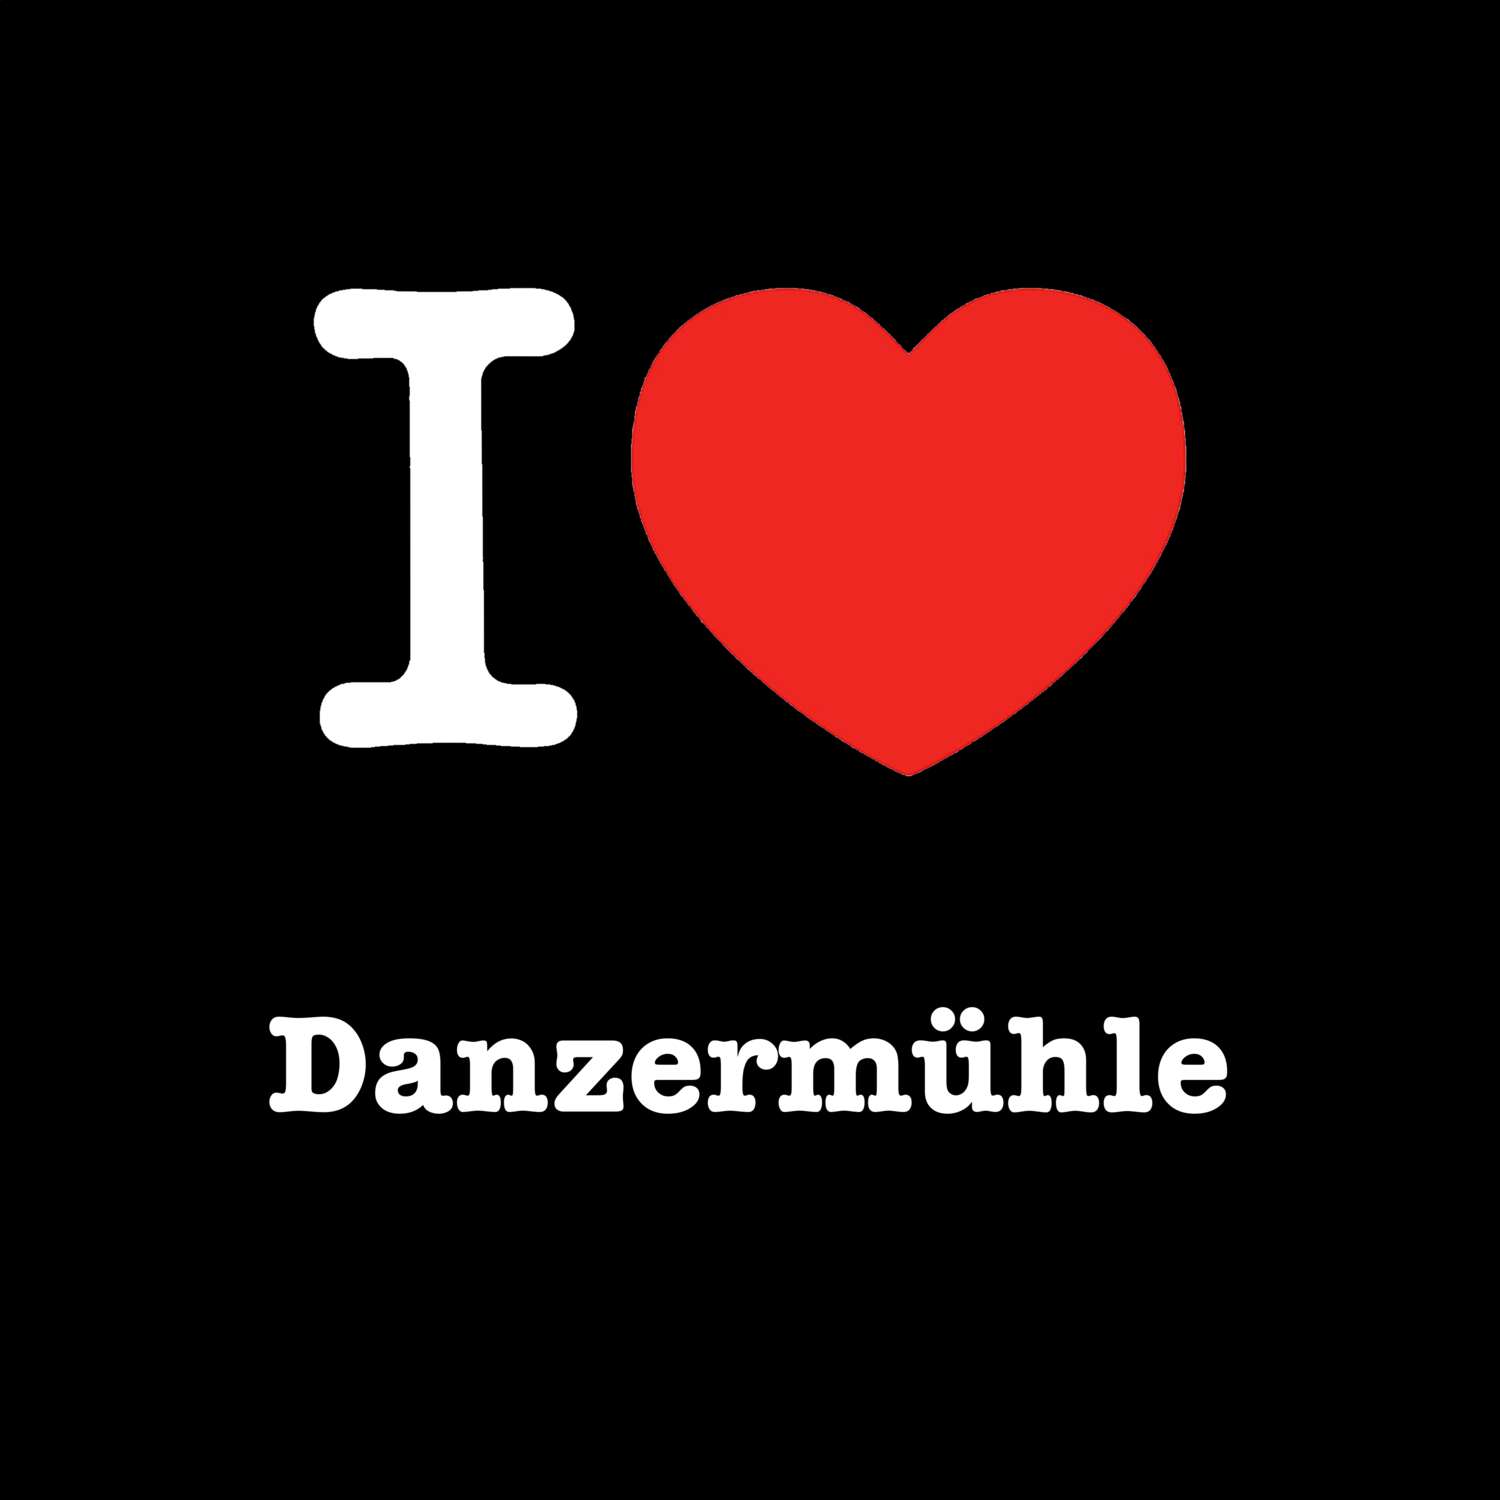 Danzermühle T-Shirt »I love«